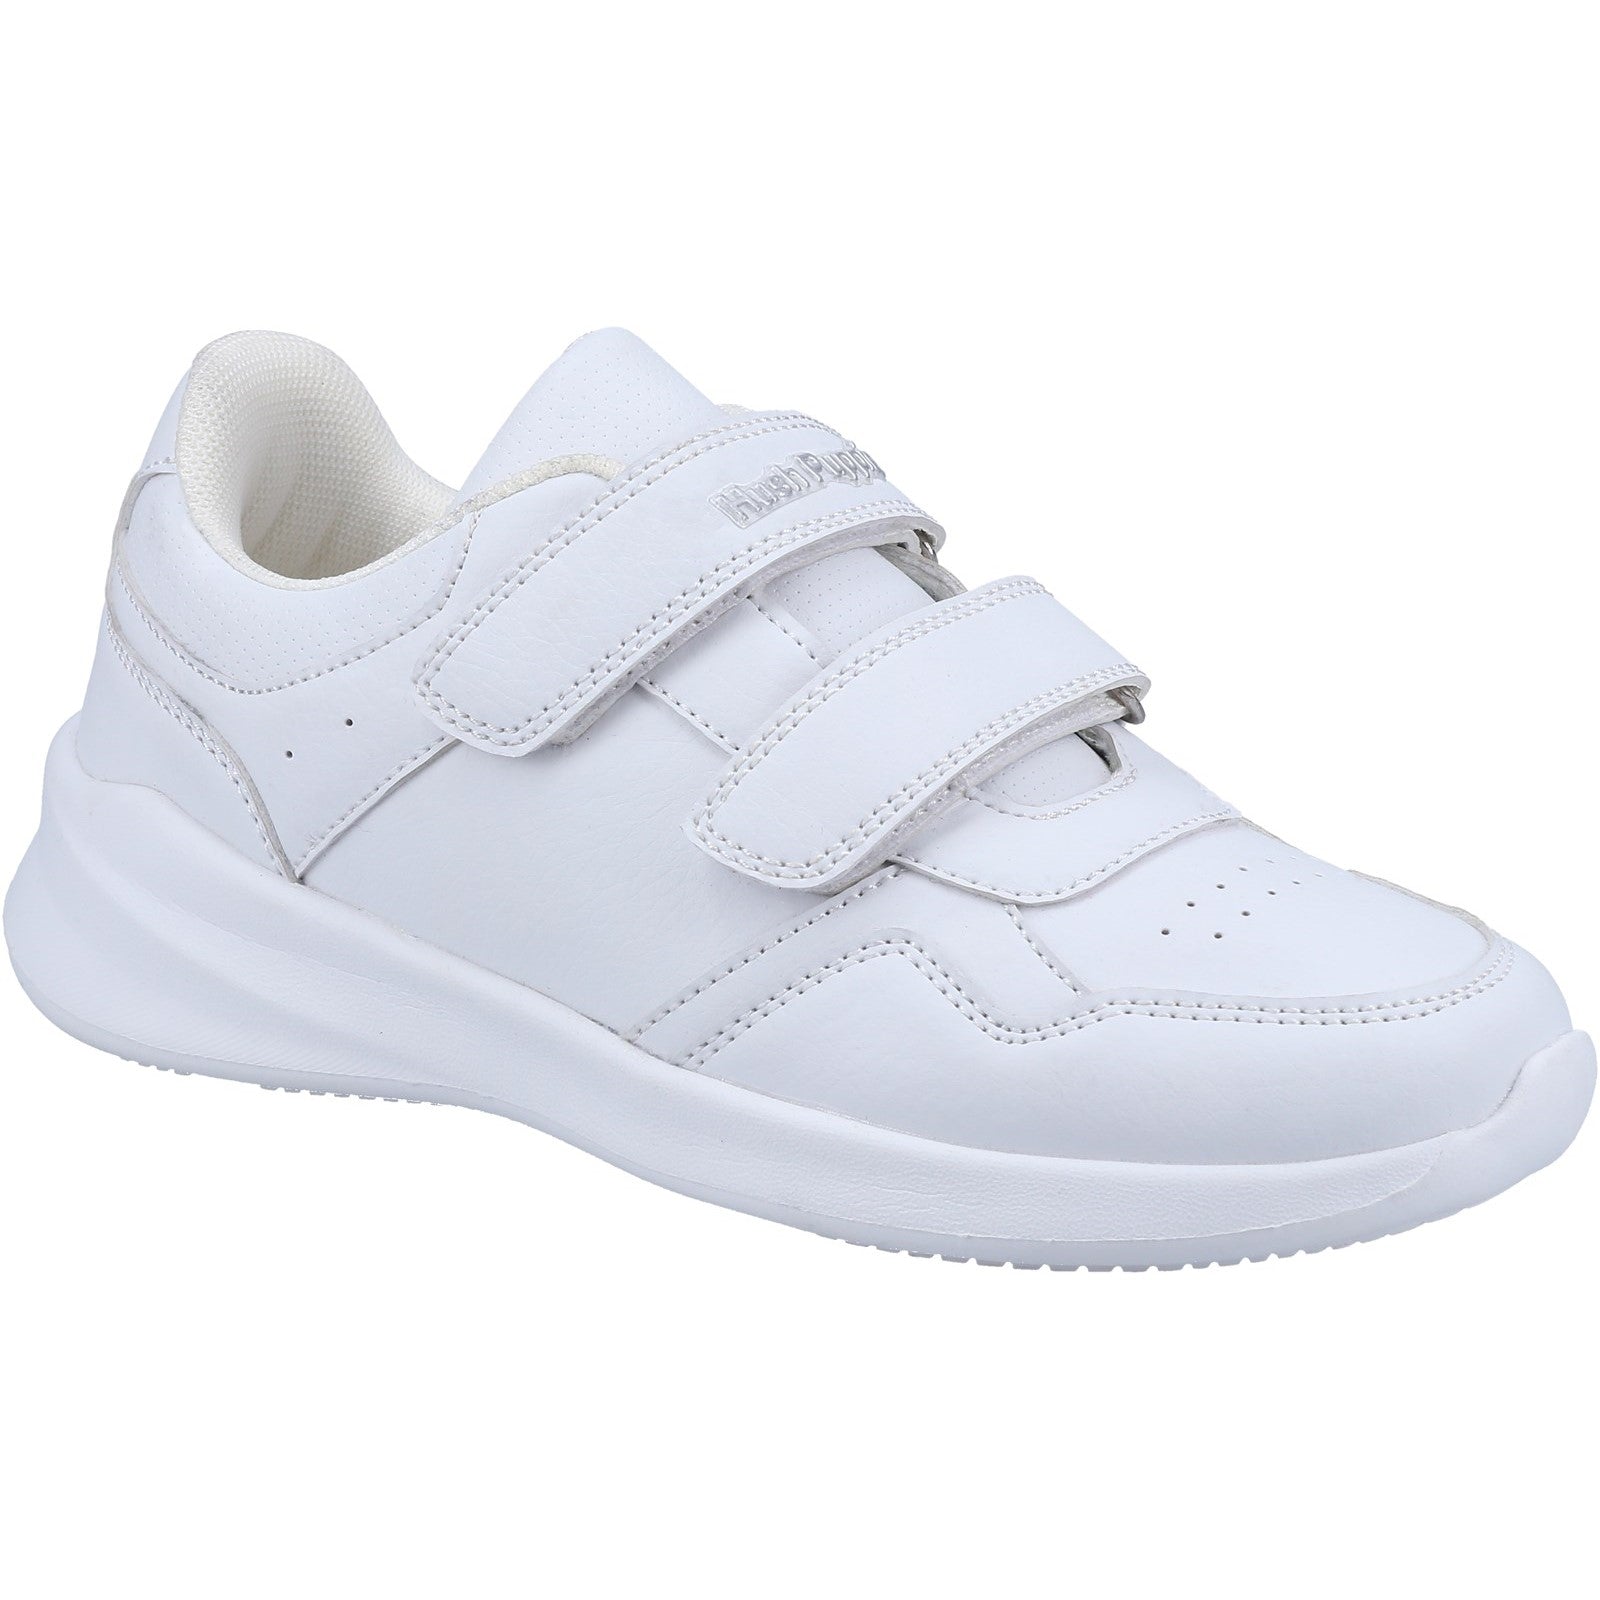 Unisex BTS White Hush Puppies Marling Easy Senior Shoes